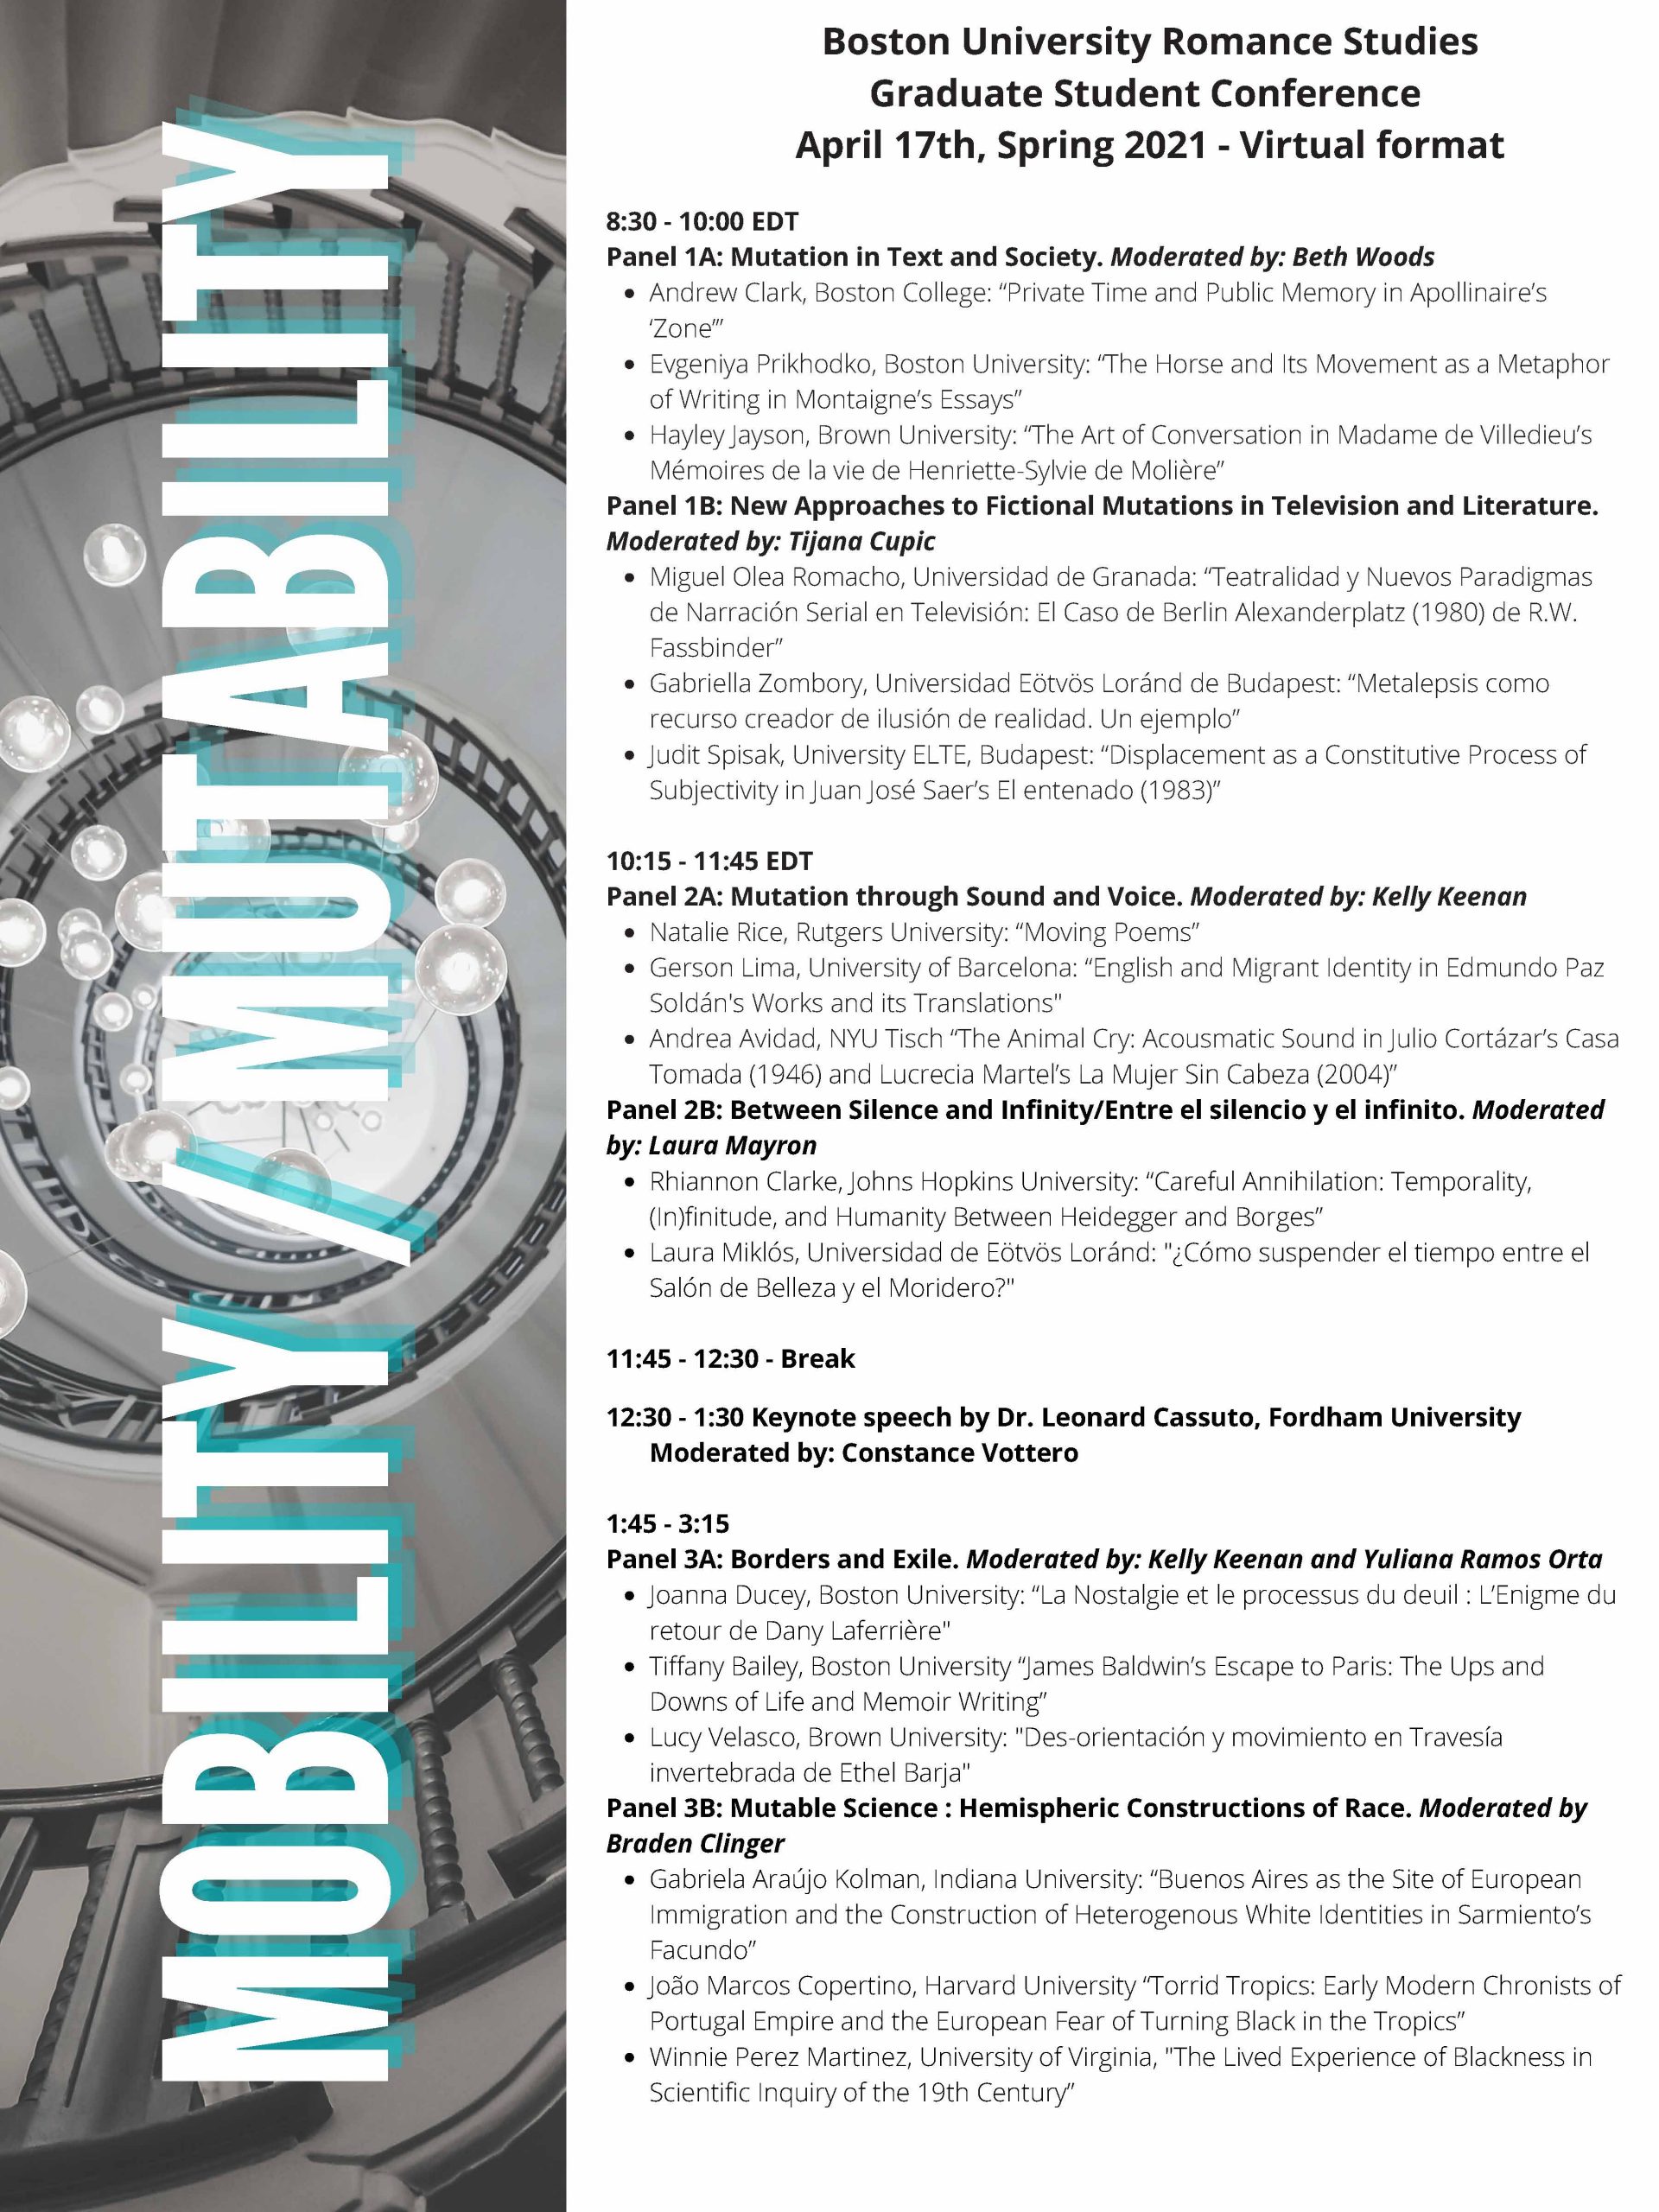 Mobility_Mutability Program | Latin American Studies